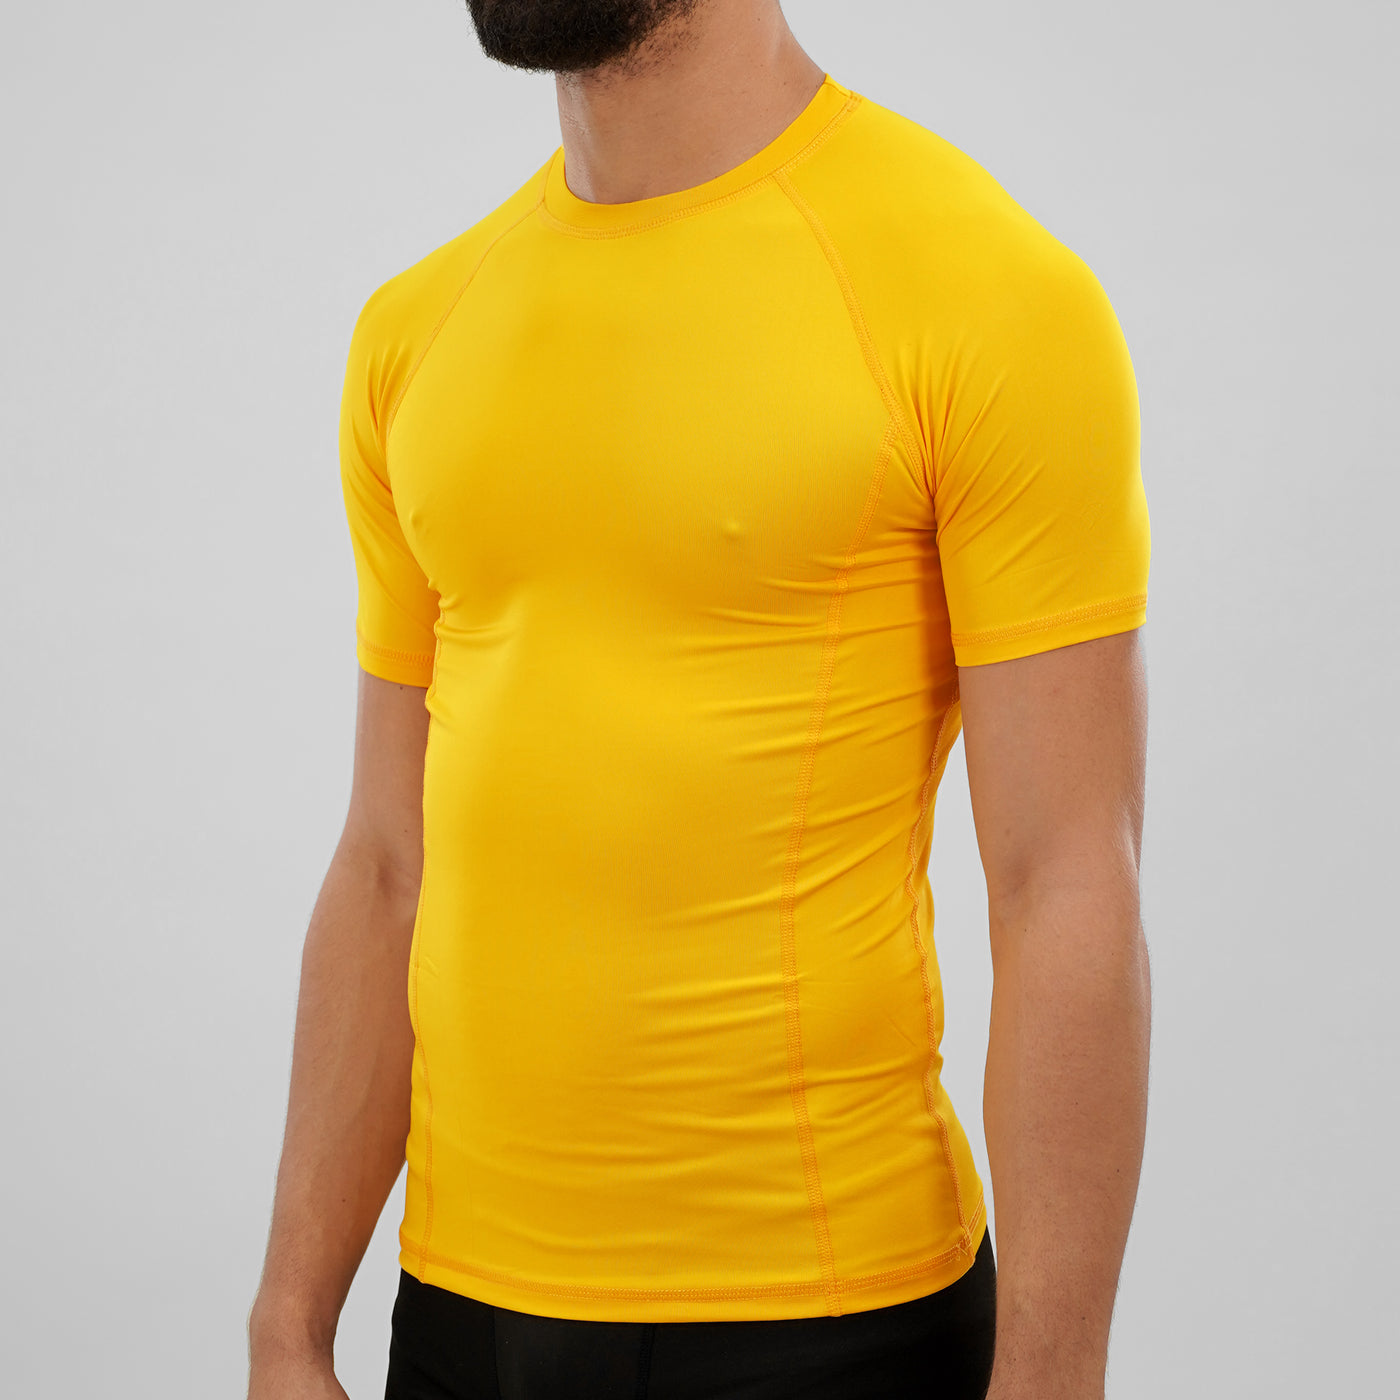 Hue Yellow Gold Compression Shirt